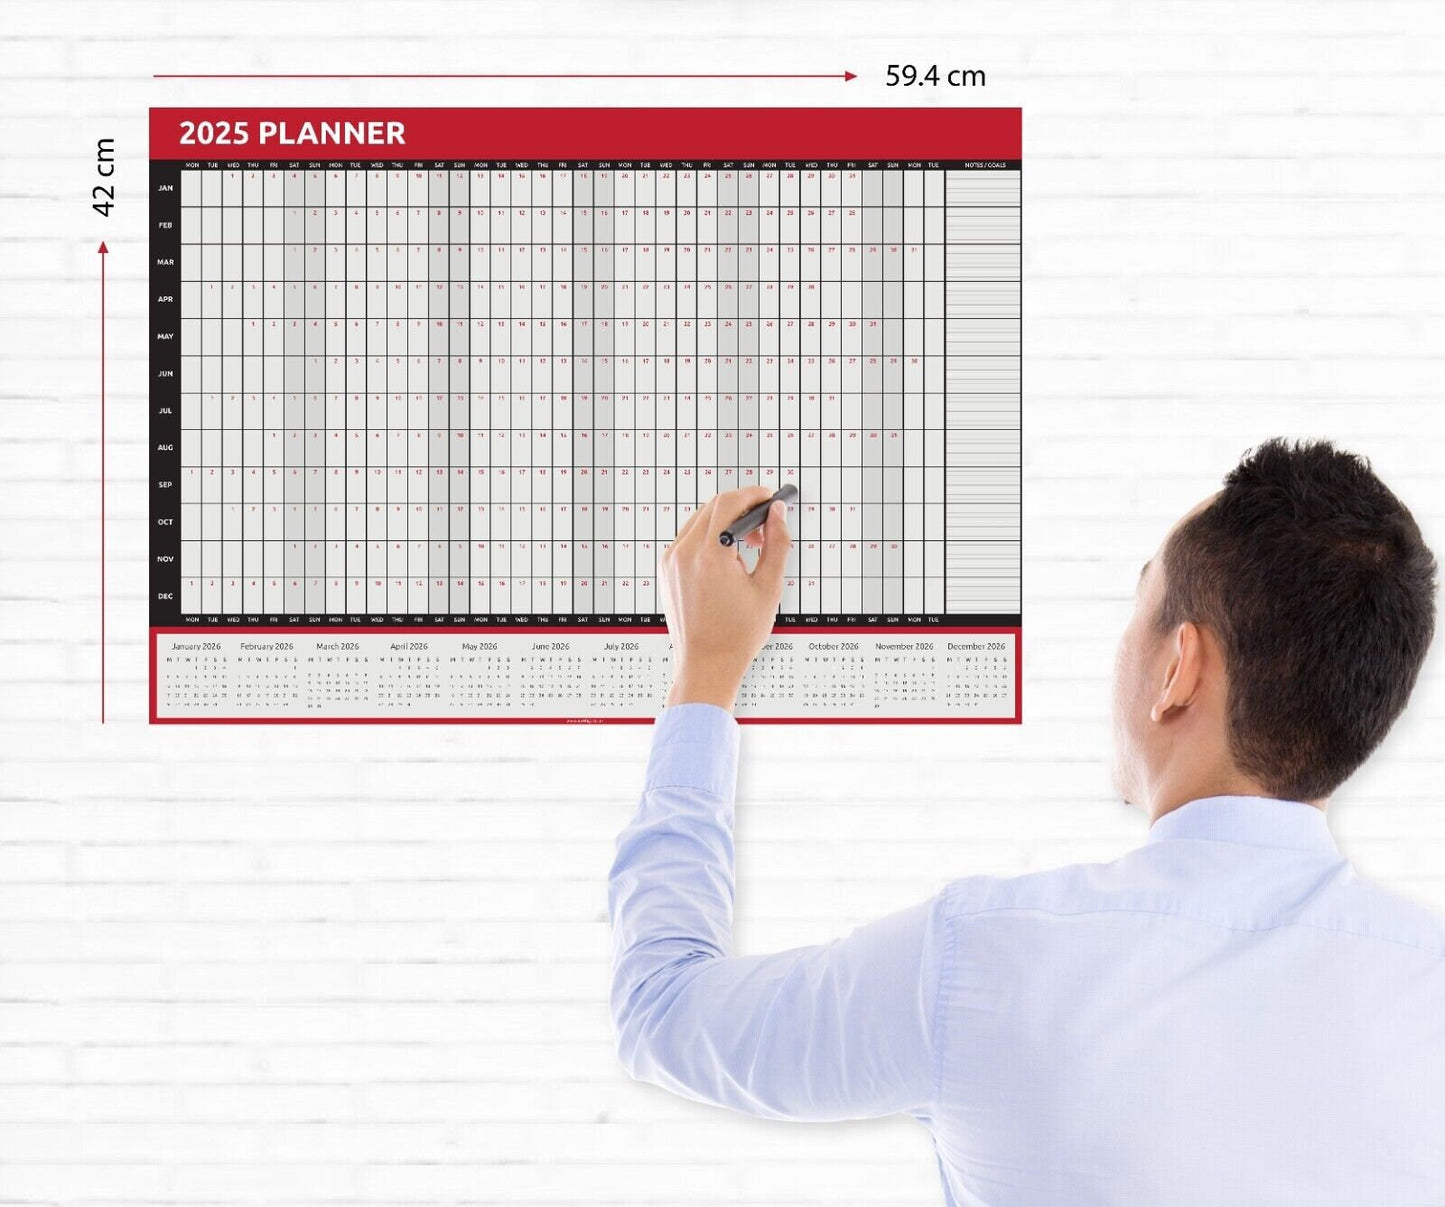 2025 A2 Size Year Wall Planner Calendar Home Office Work JAN DEC 59cm x 42cm Keechi & co.